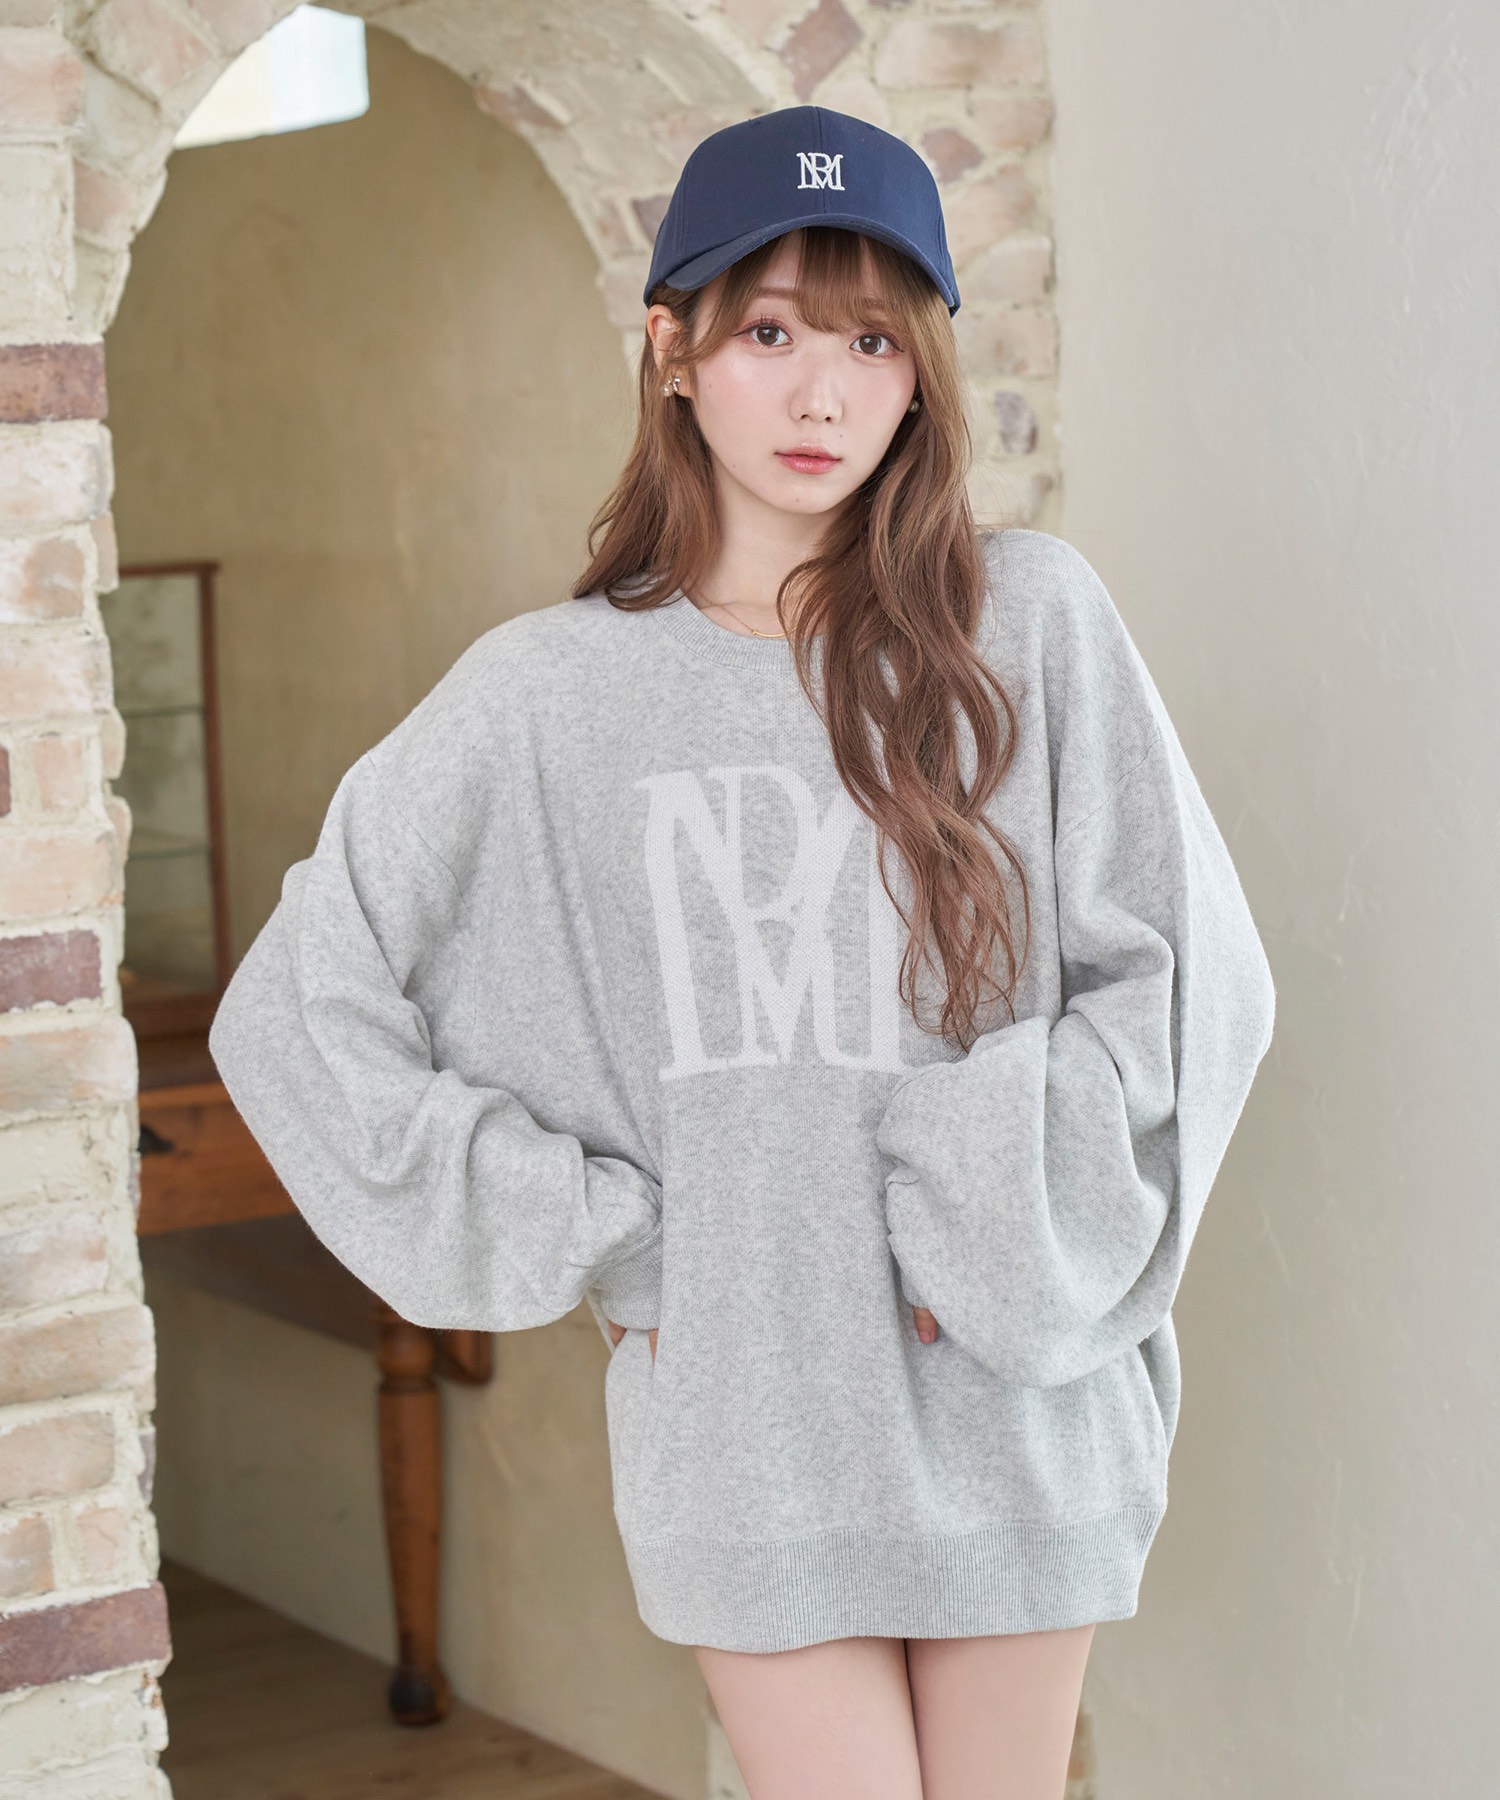 Rosé Muse RM logo knit_L size【navy】ロゼミューズ - urtrs.ba